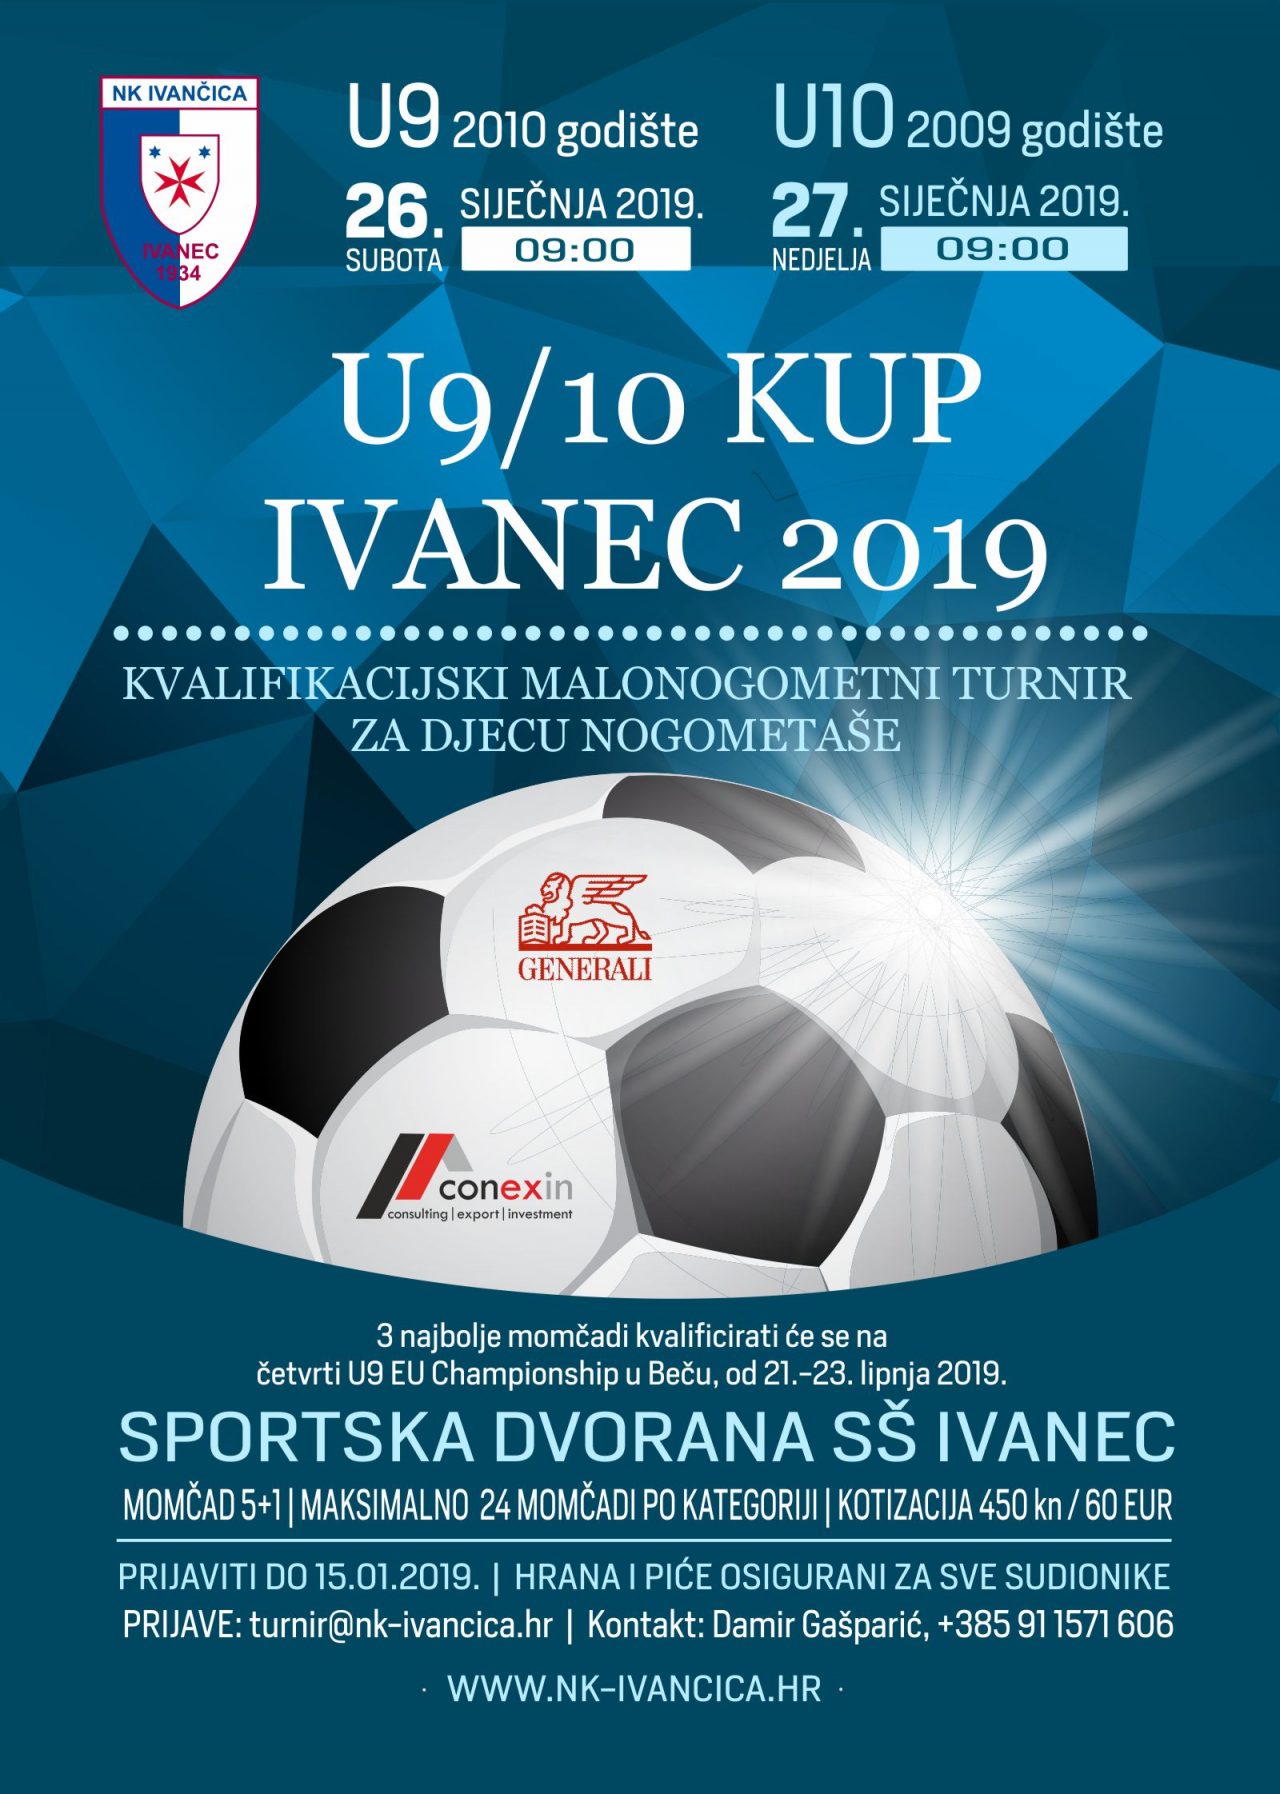 Plakat-U9-10-KUP-Ivanec-2019-1-1280x1794.jpg